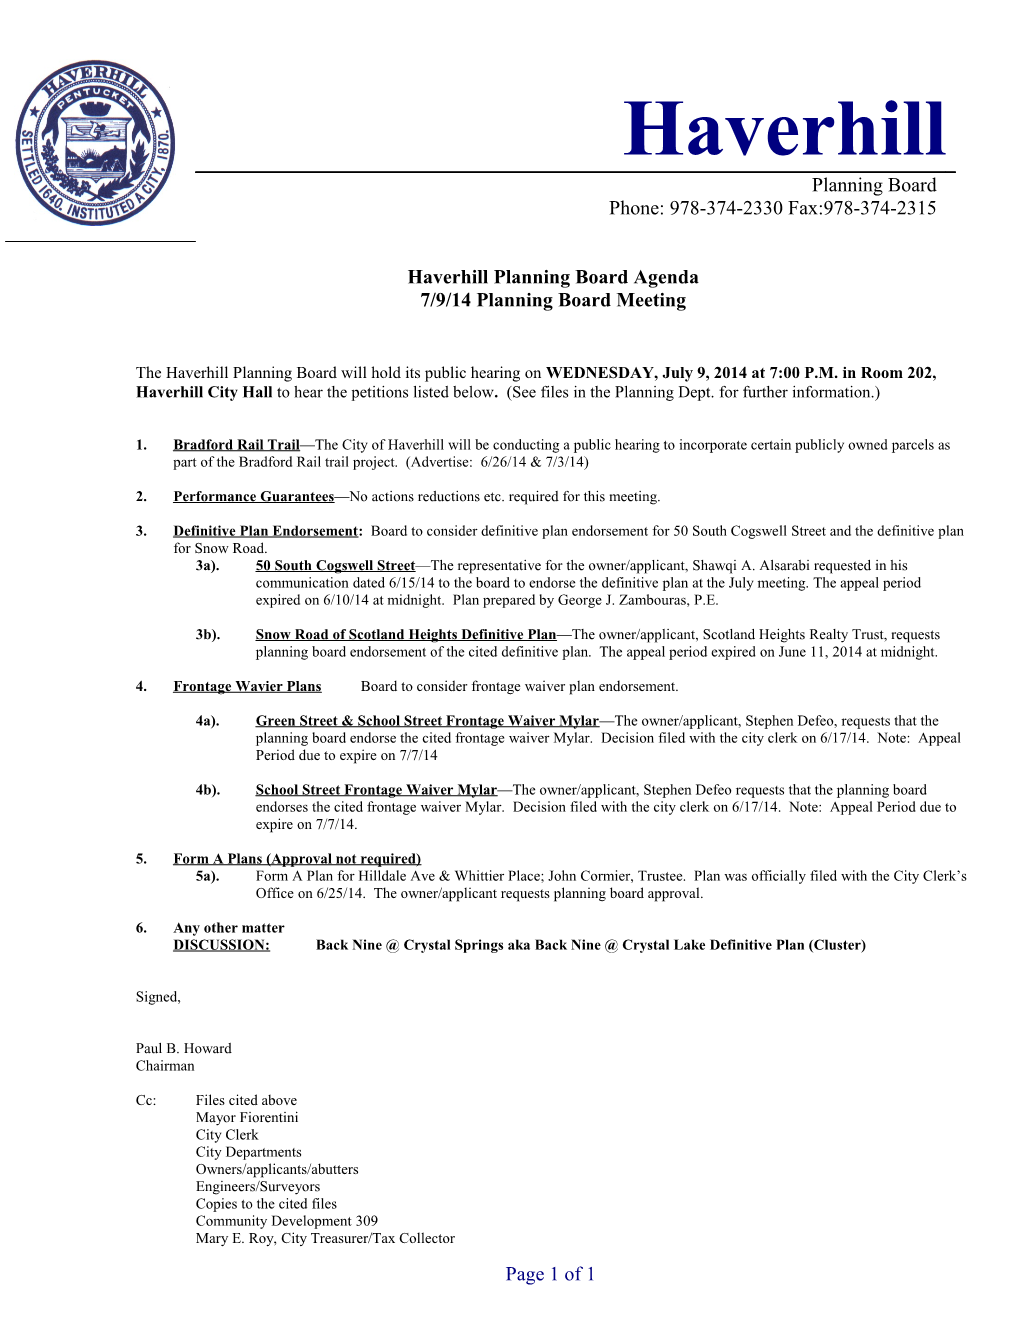 Haverhill Planning Board Agenda s1